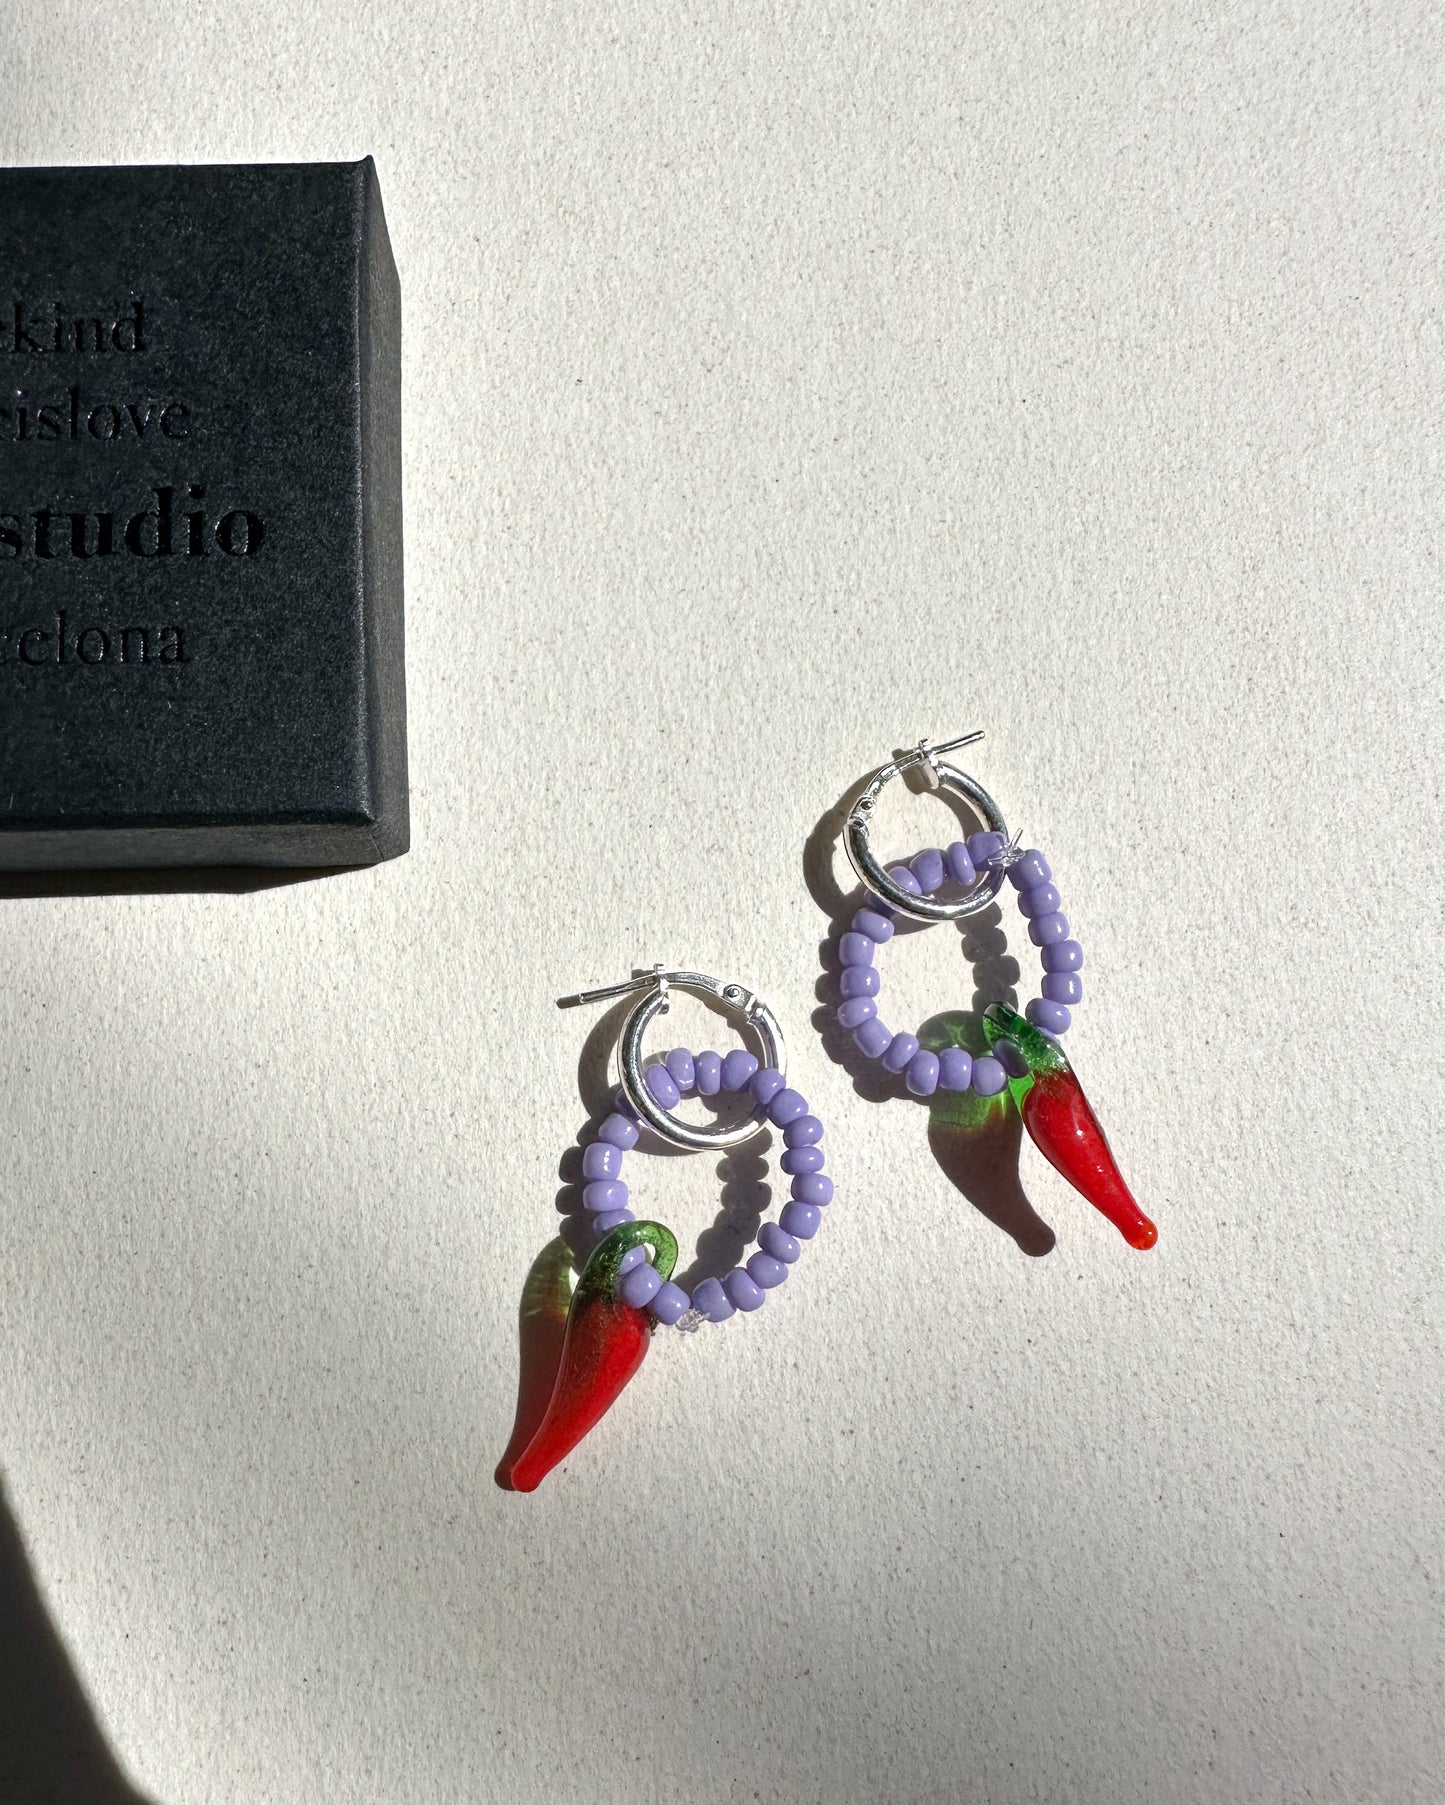 Chili and beads hoop earrings.